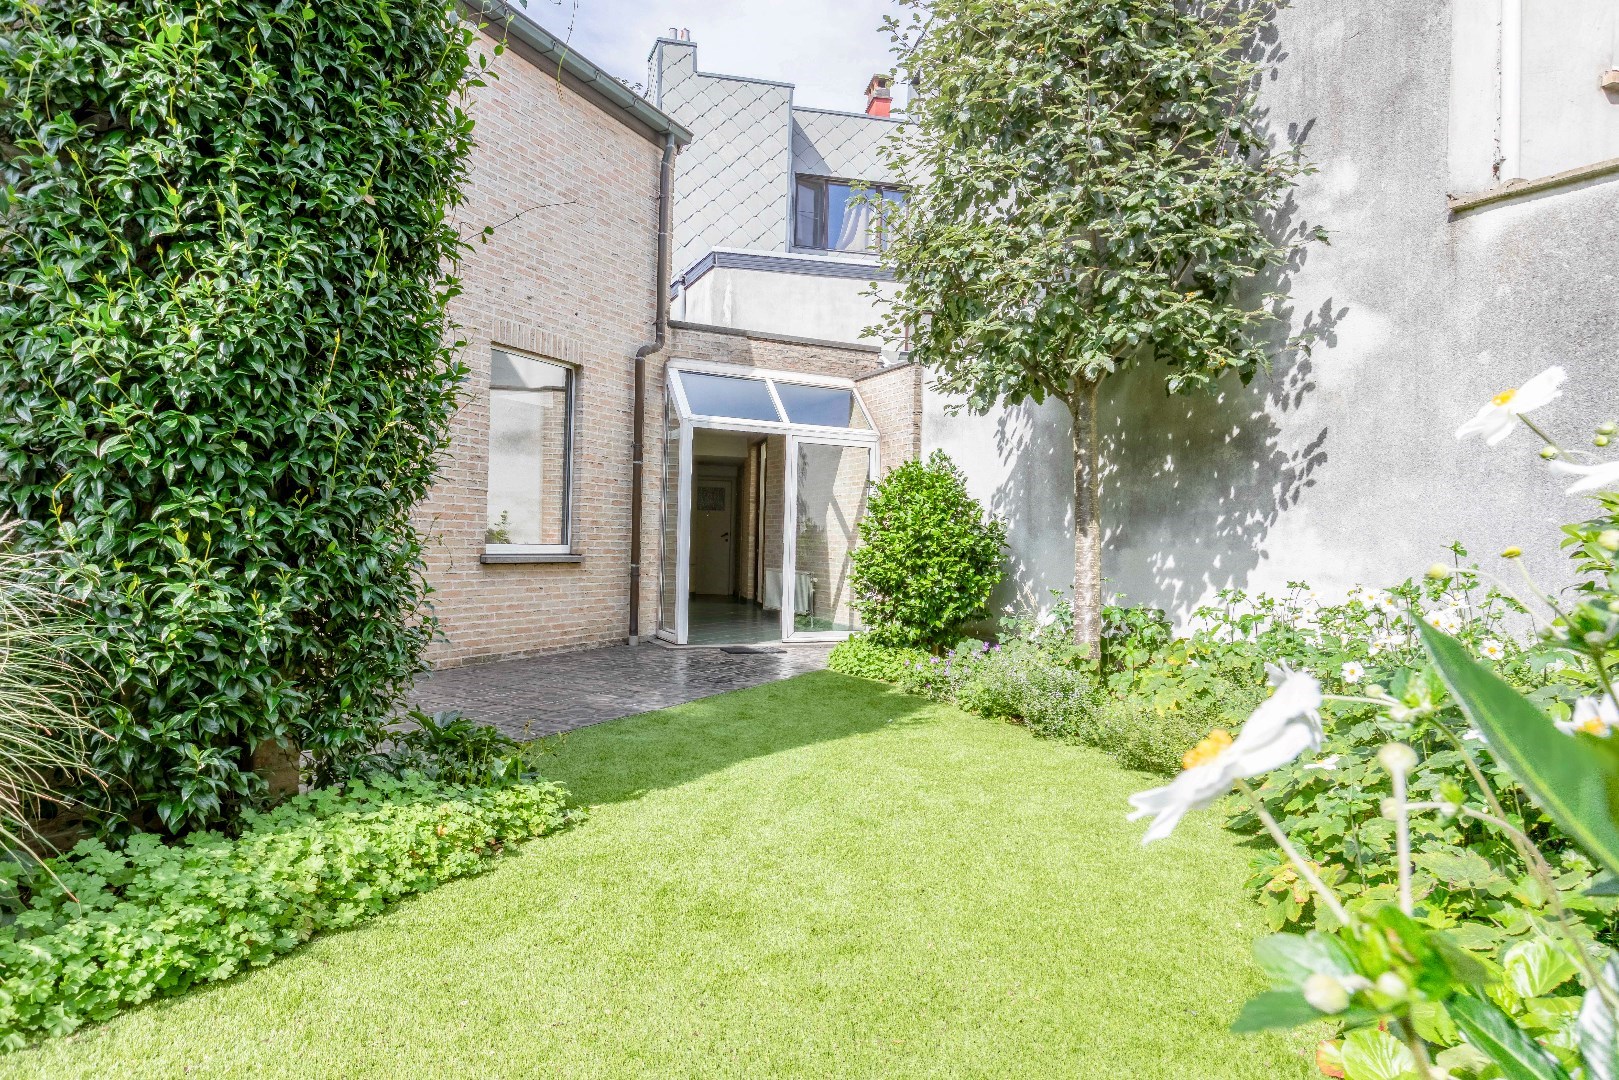 VERHUURD ! Ruime woning met tuin en dubbele garage in Gent - ideale woning voor cohousing 